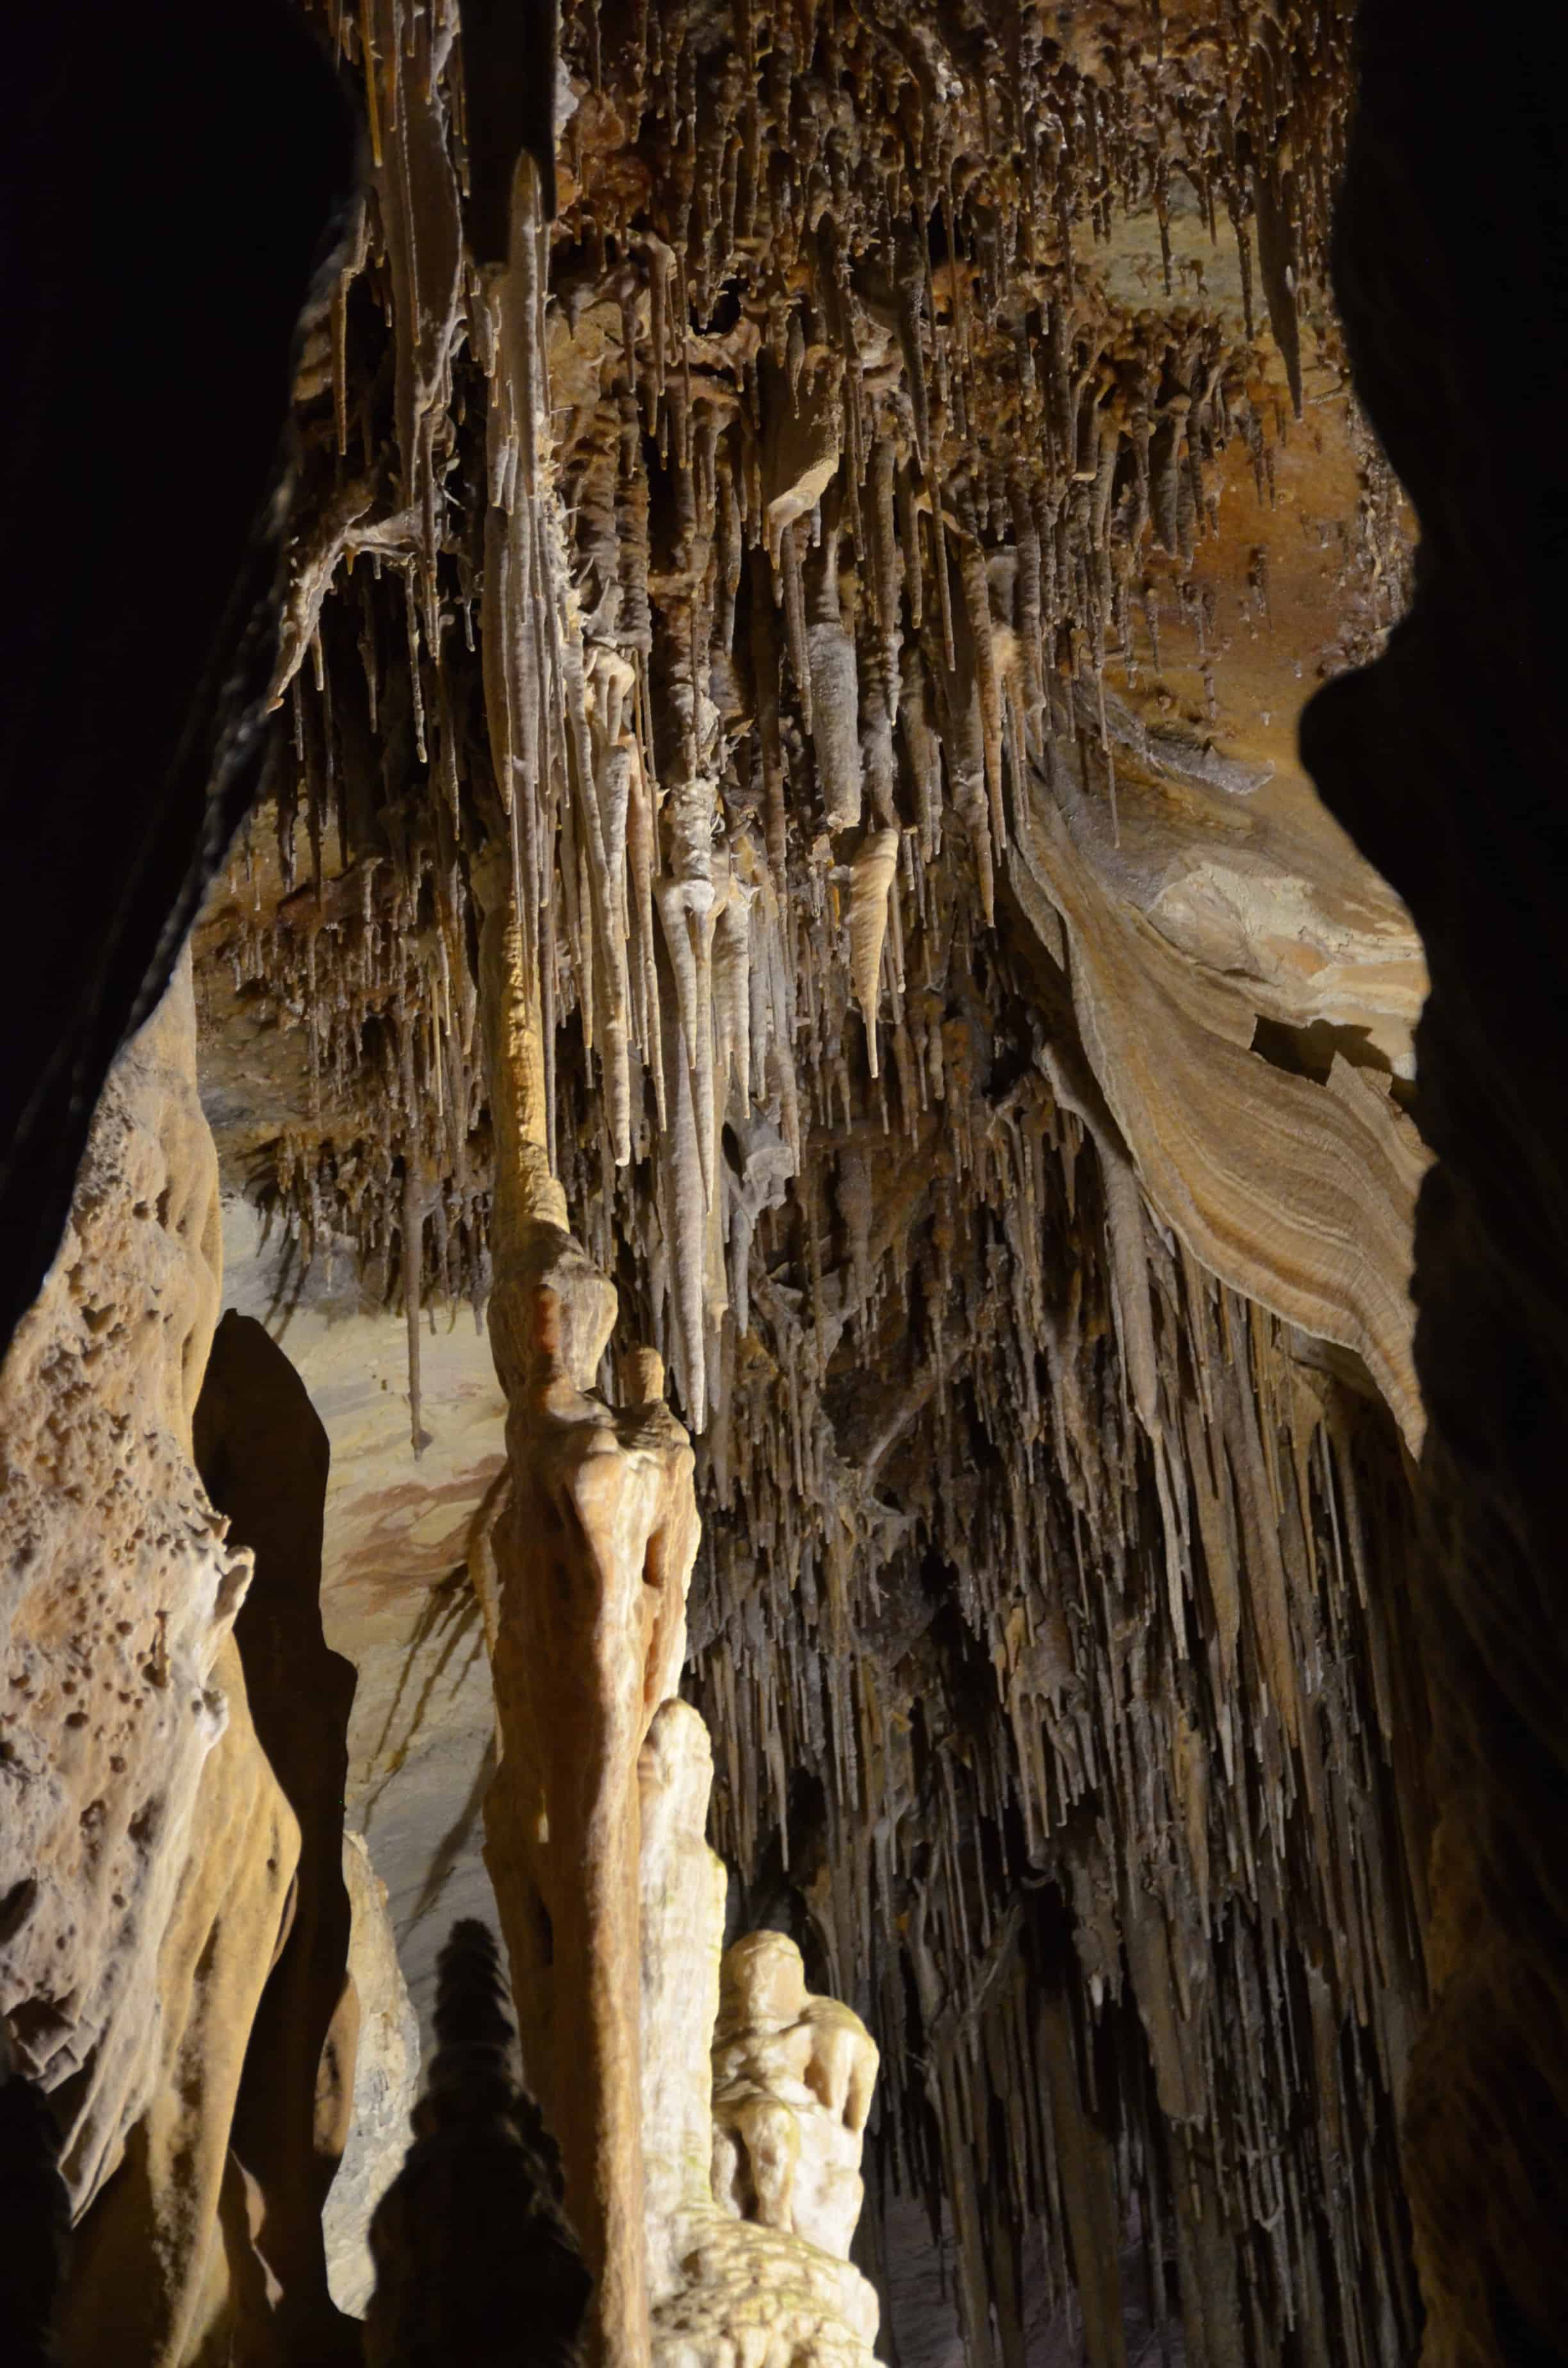 Cave formations at Lehman Caves, Great Basin National Park, Nevada